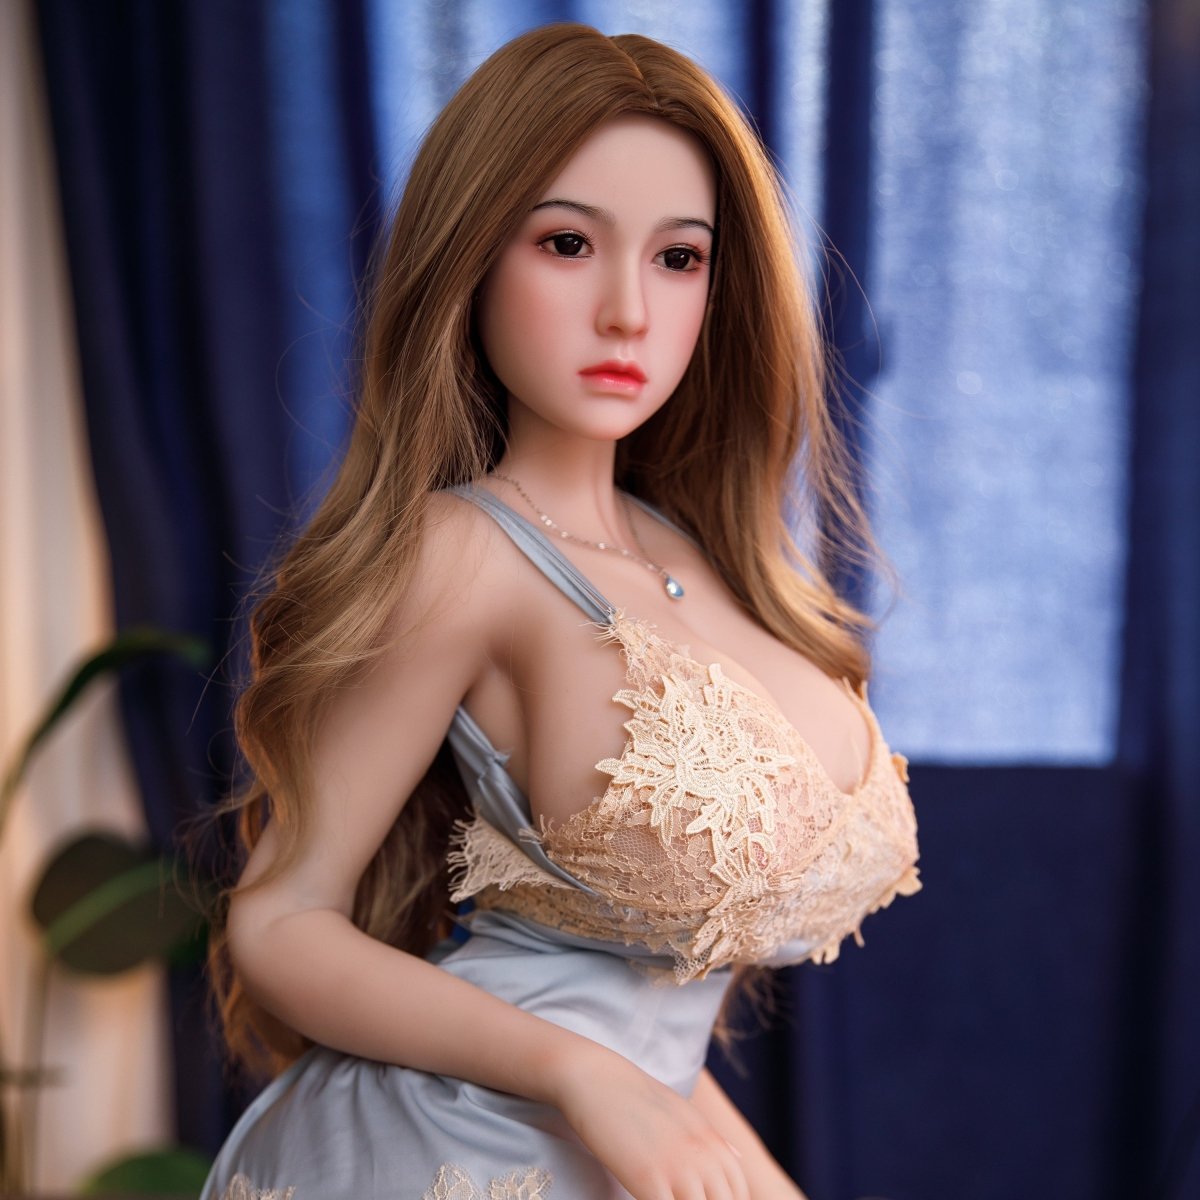 JY Doll mini 125 cm Fusion - Mia - FRISKY BUSINESS SG